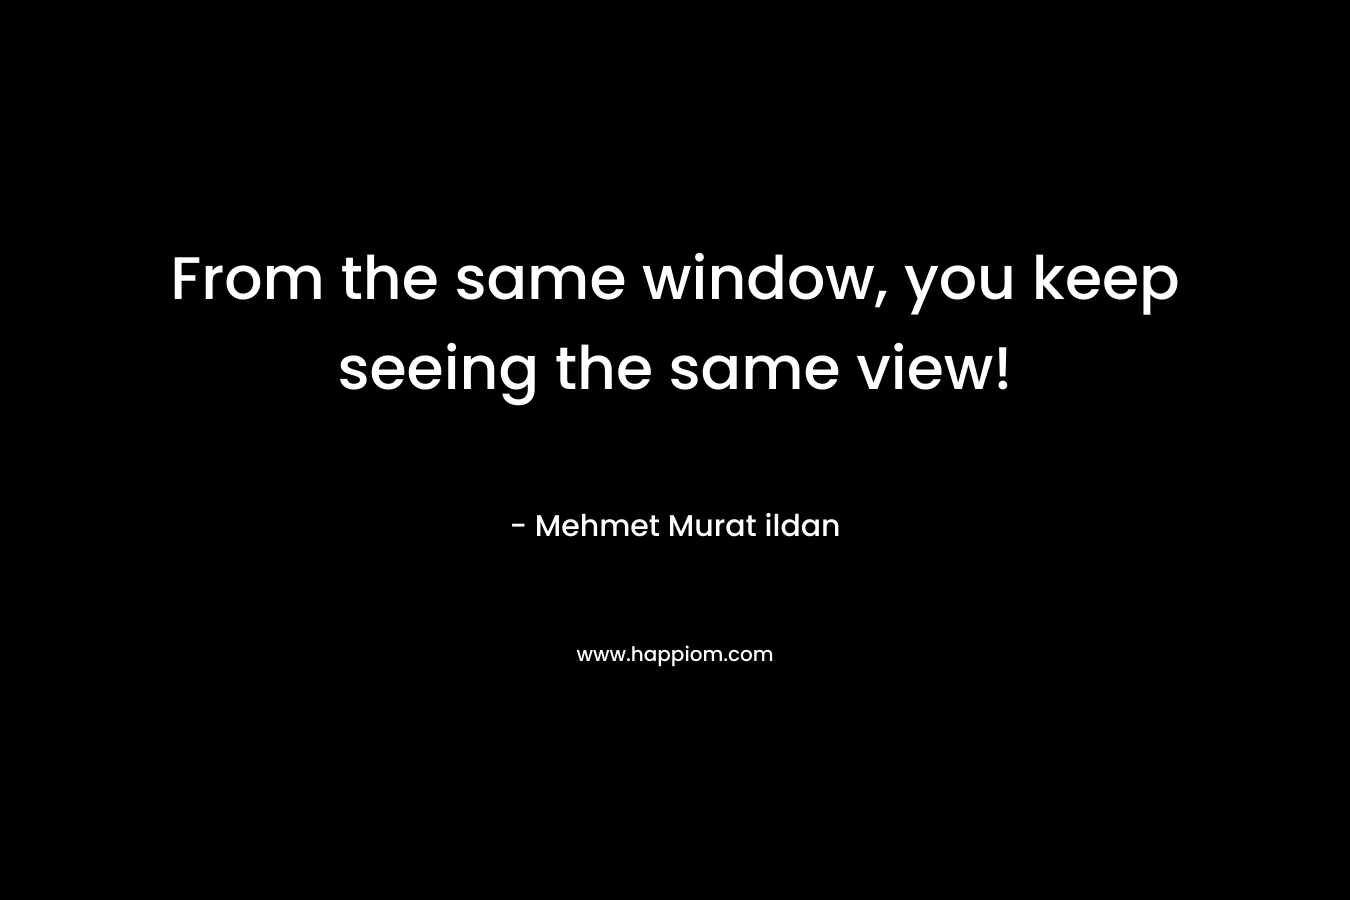 From the same window, you keep seeing the same view! – Mehmet Murat ildan